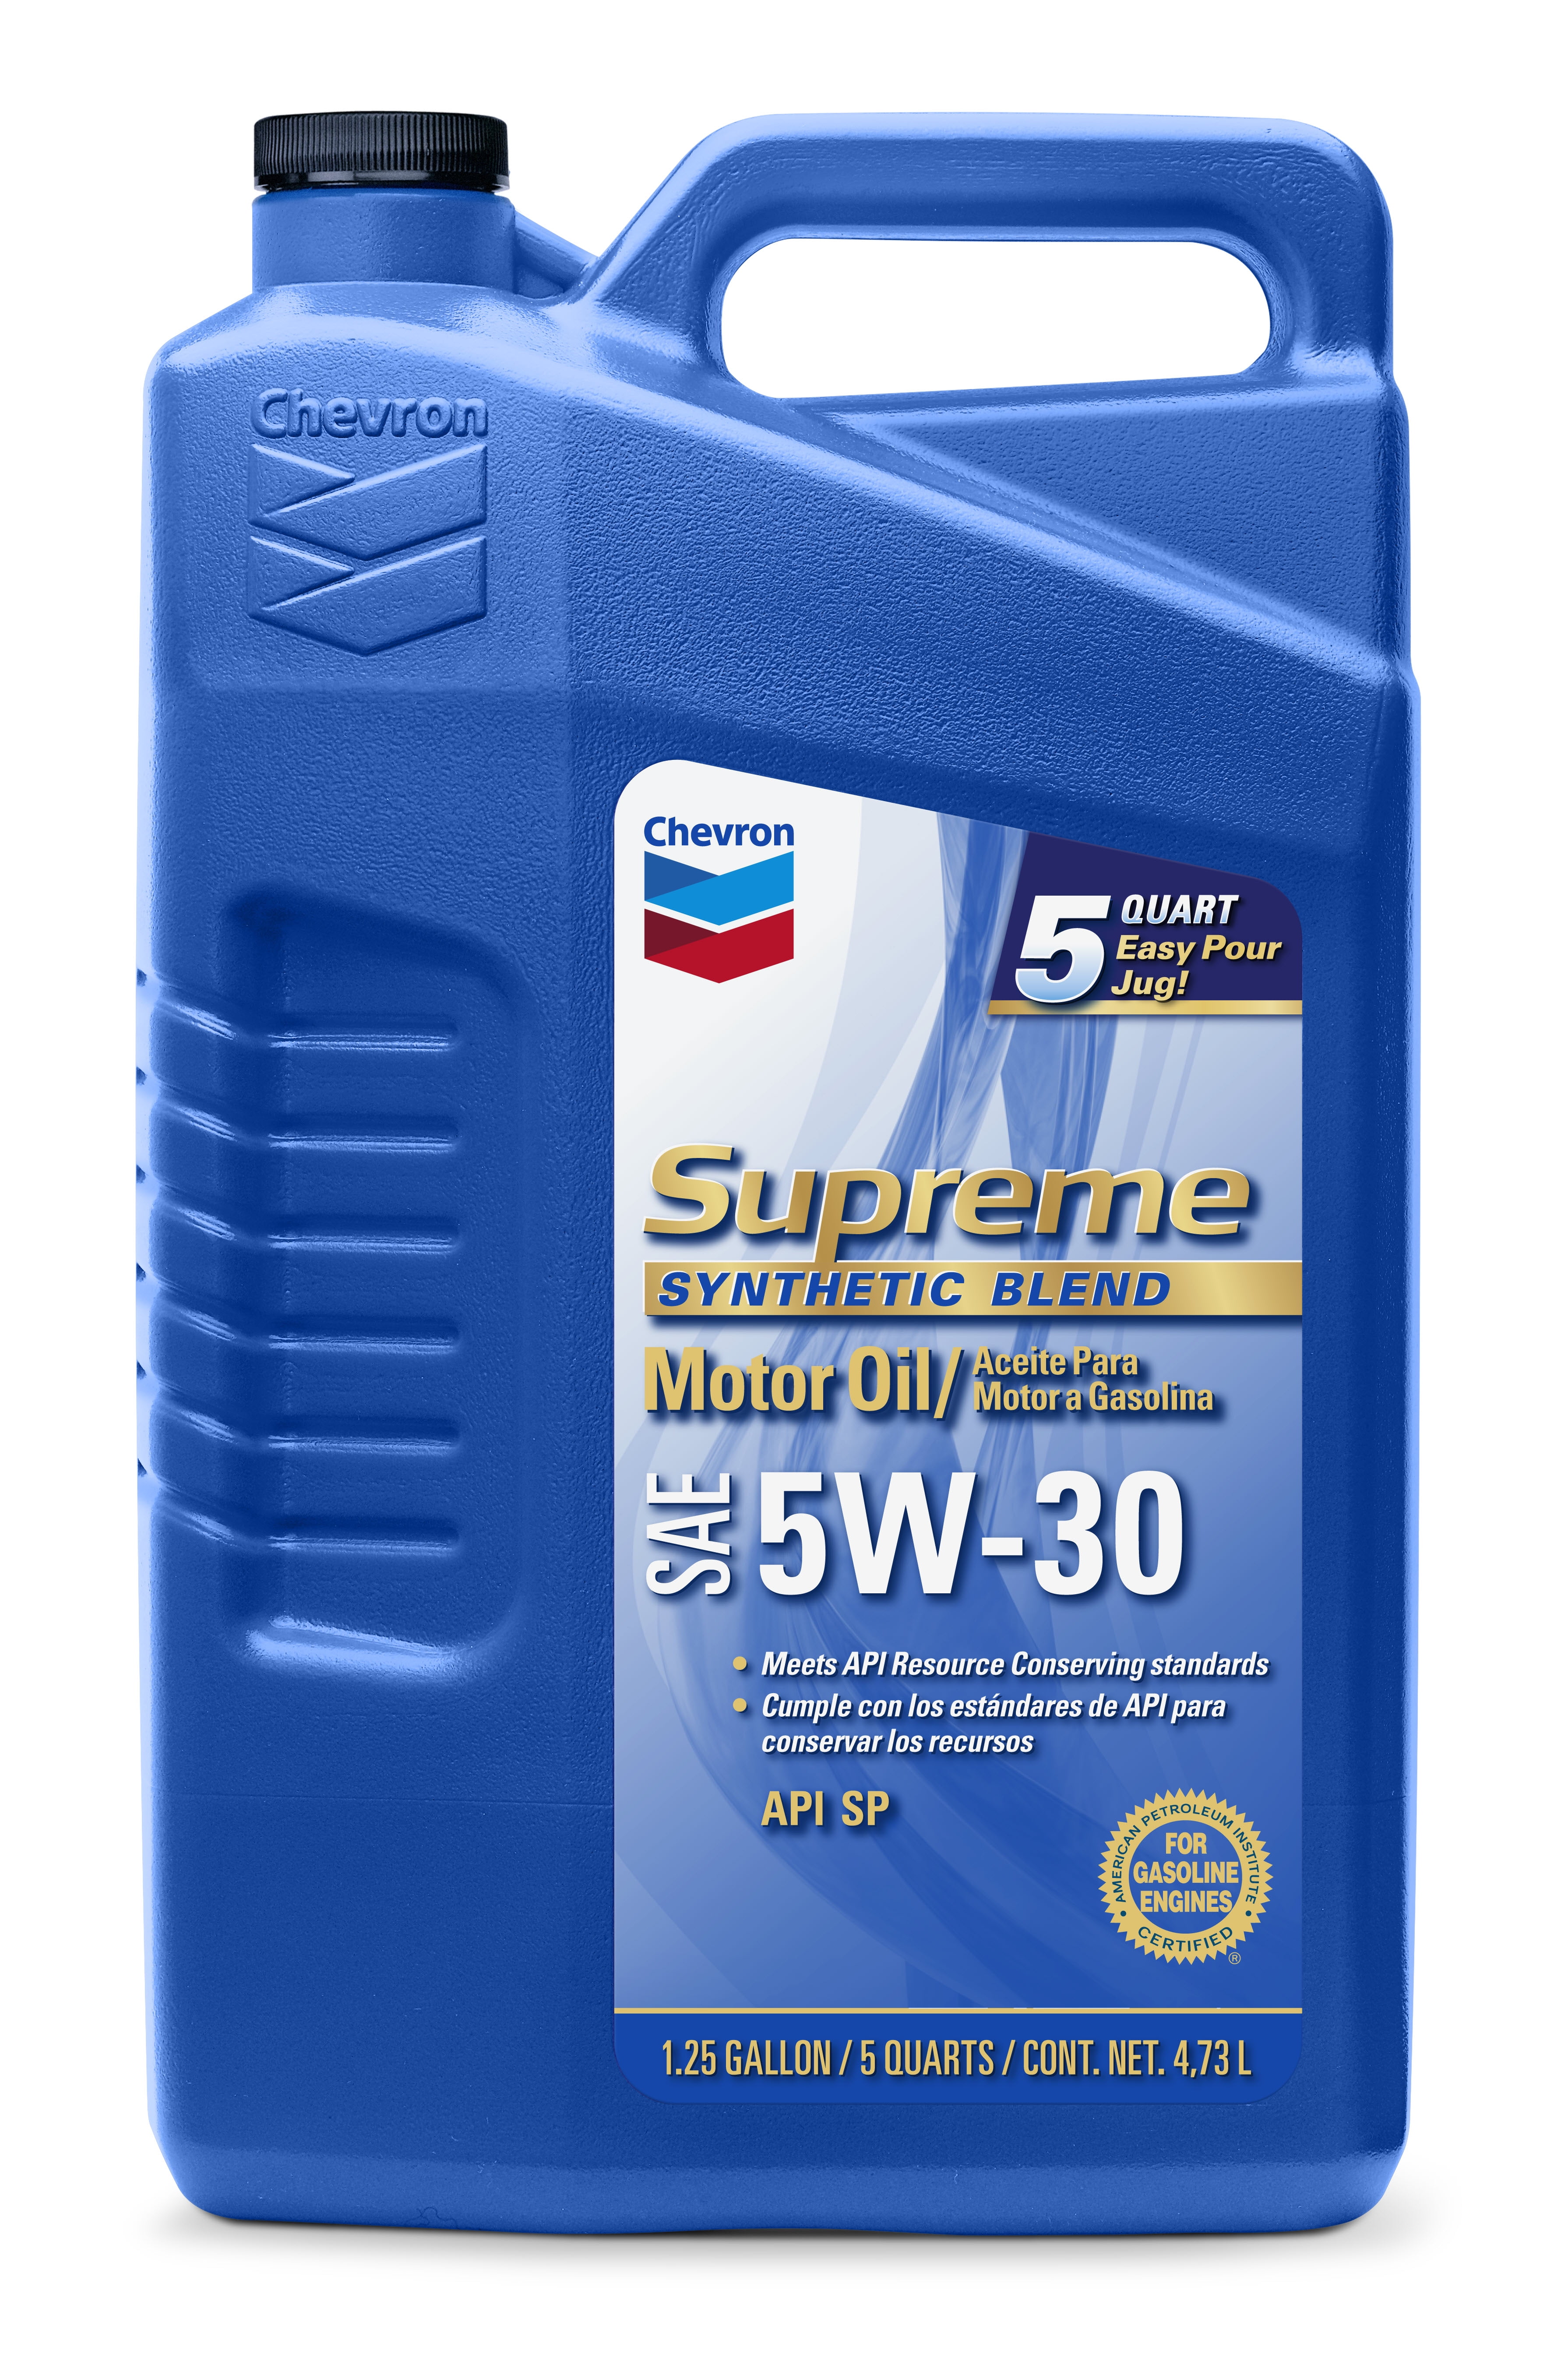 Chevron Supreme Synthetic Blend Motor Oil 5W30 5 Quart Walmart 